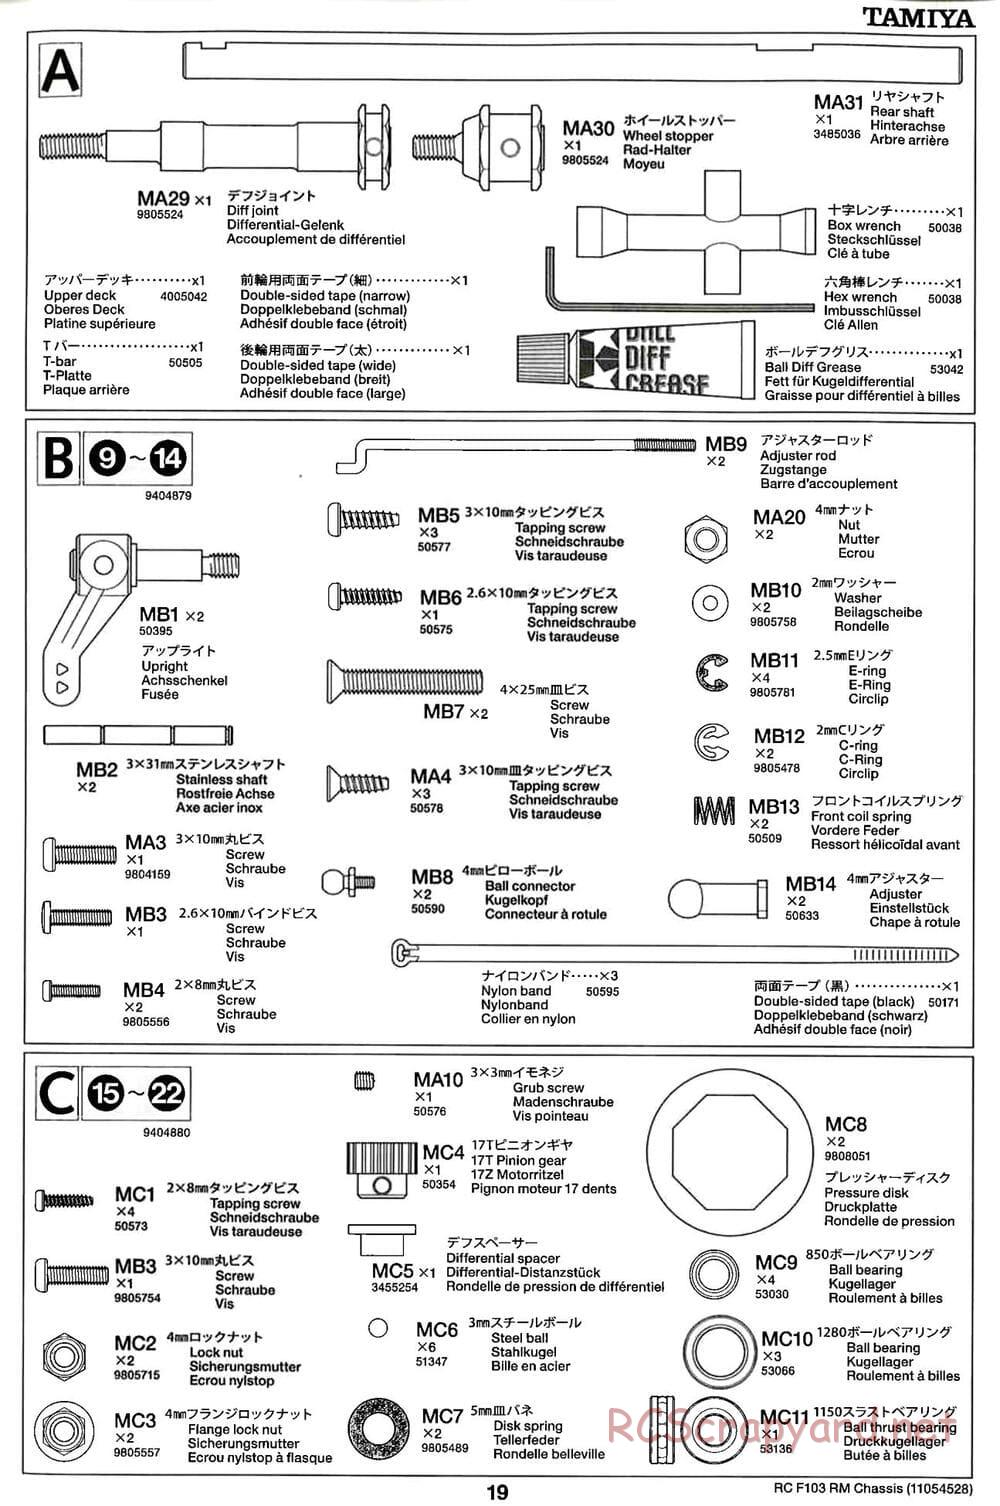 Tamiya - F103RM Chassis - Manual - Page 19